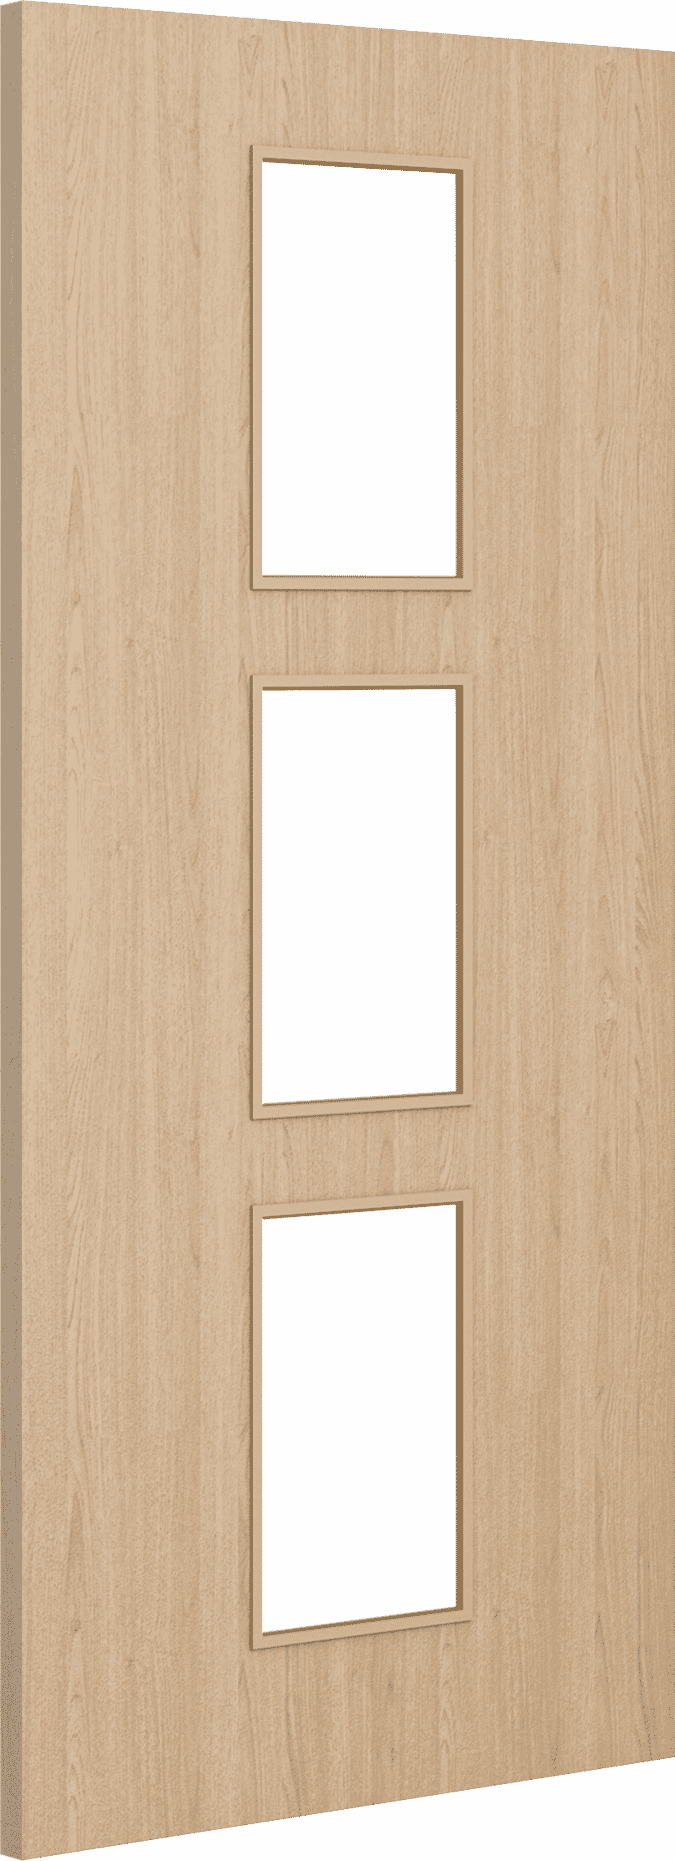 2040mm x 826mm x 44mm Architectural Oak 11 Frosted Glazed - Prefinished FD30 Fire Door Blank